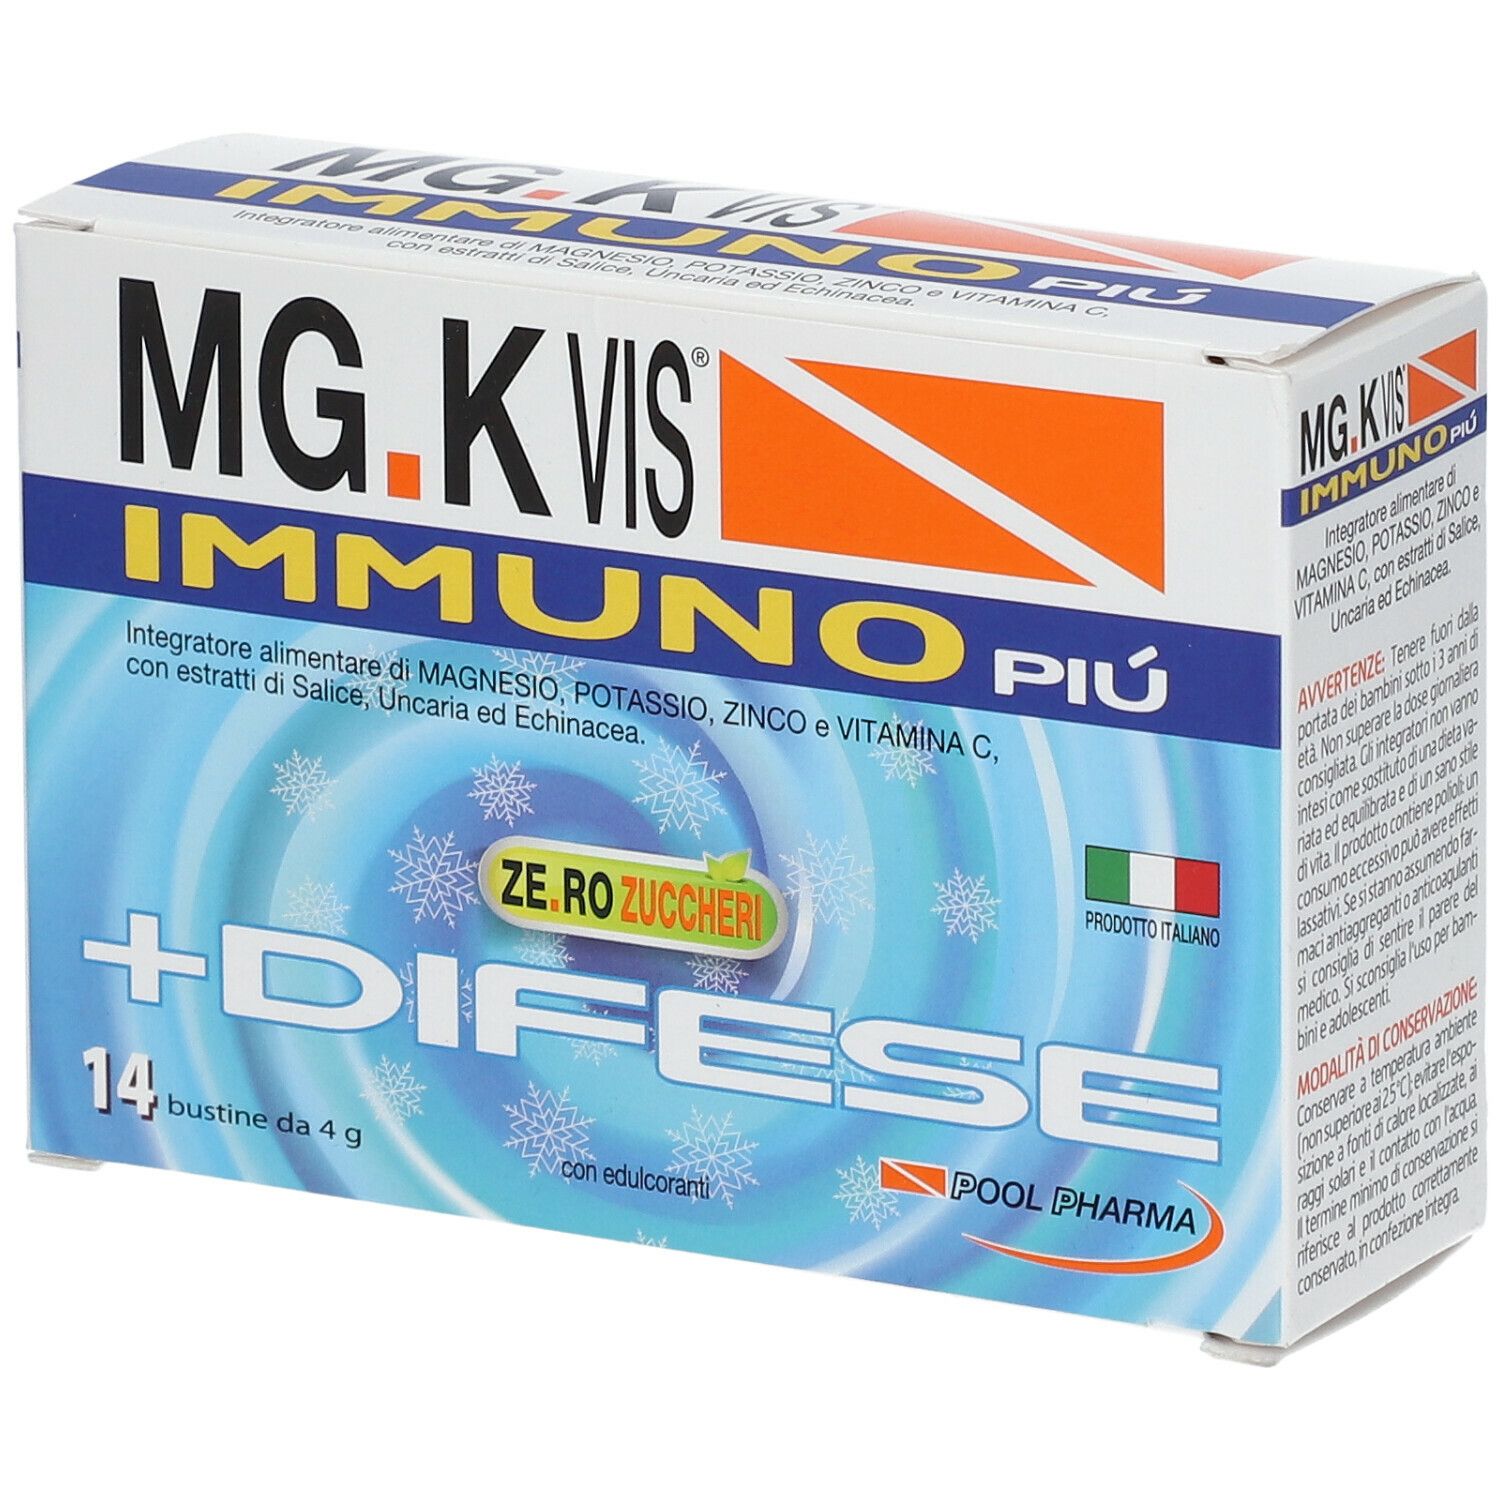 Image of MG.K Vis Immuno Più